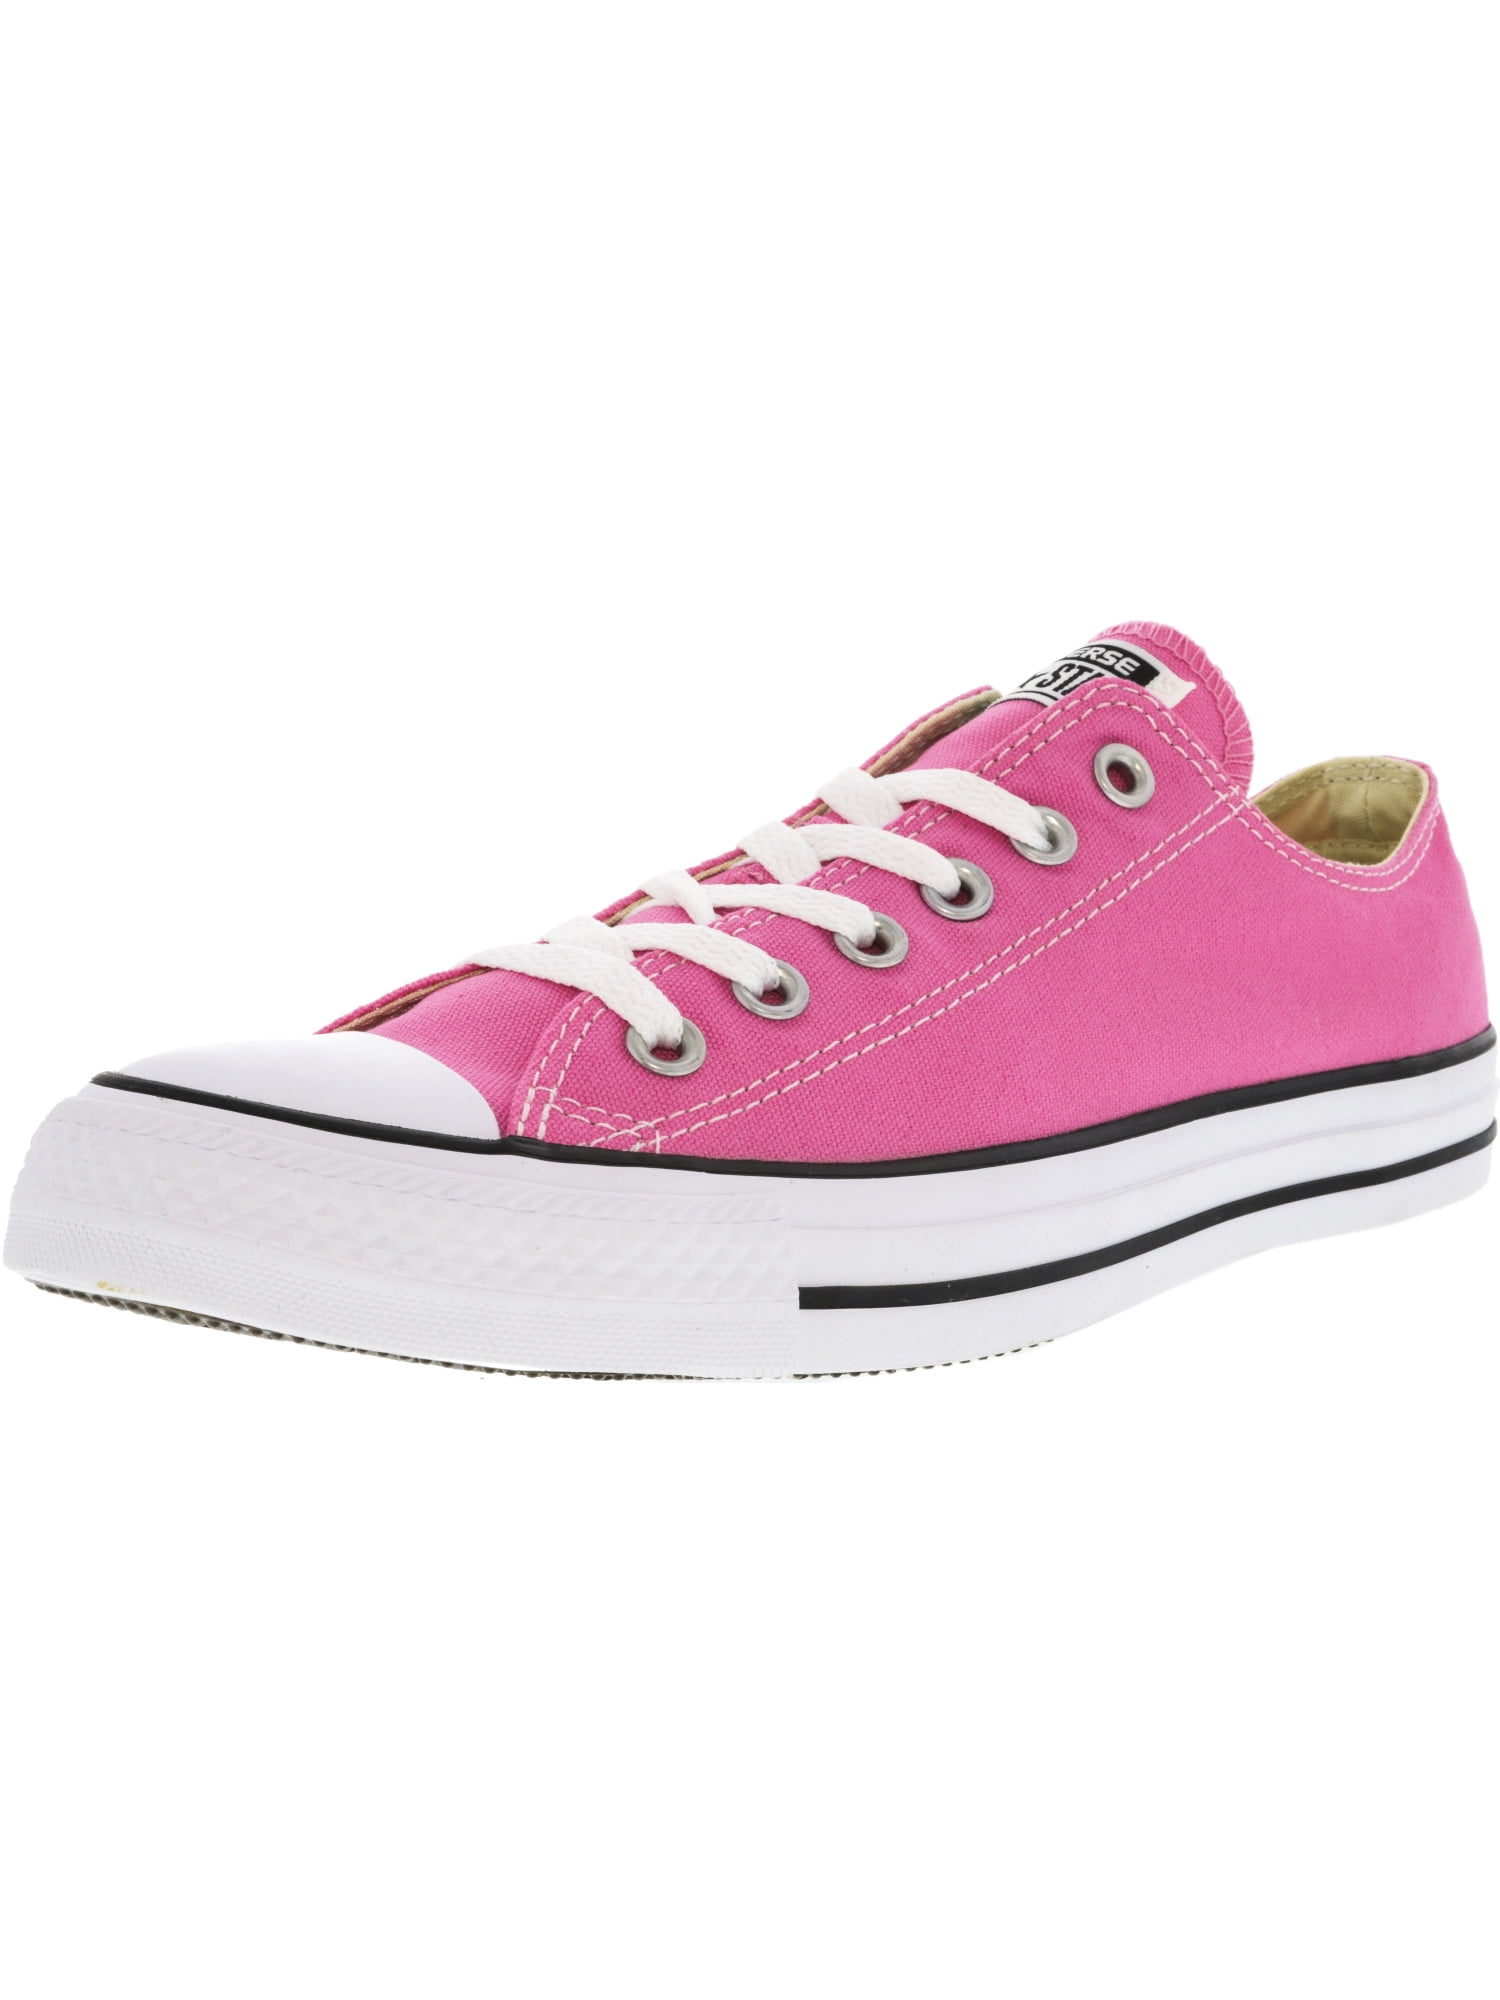 Databasen Skibform tack Converse All Star Ox Pink Ankle-High Fashion Sneaker - Walmart.com